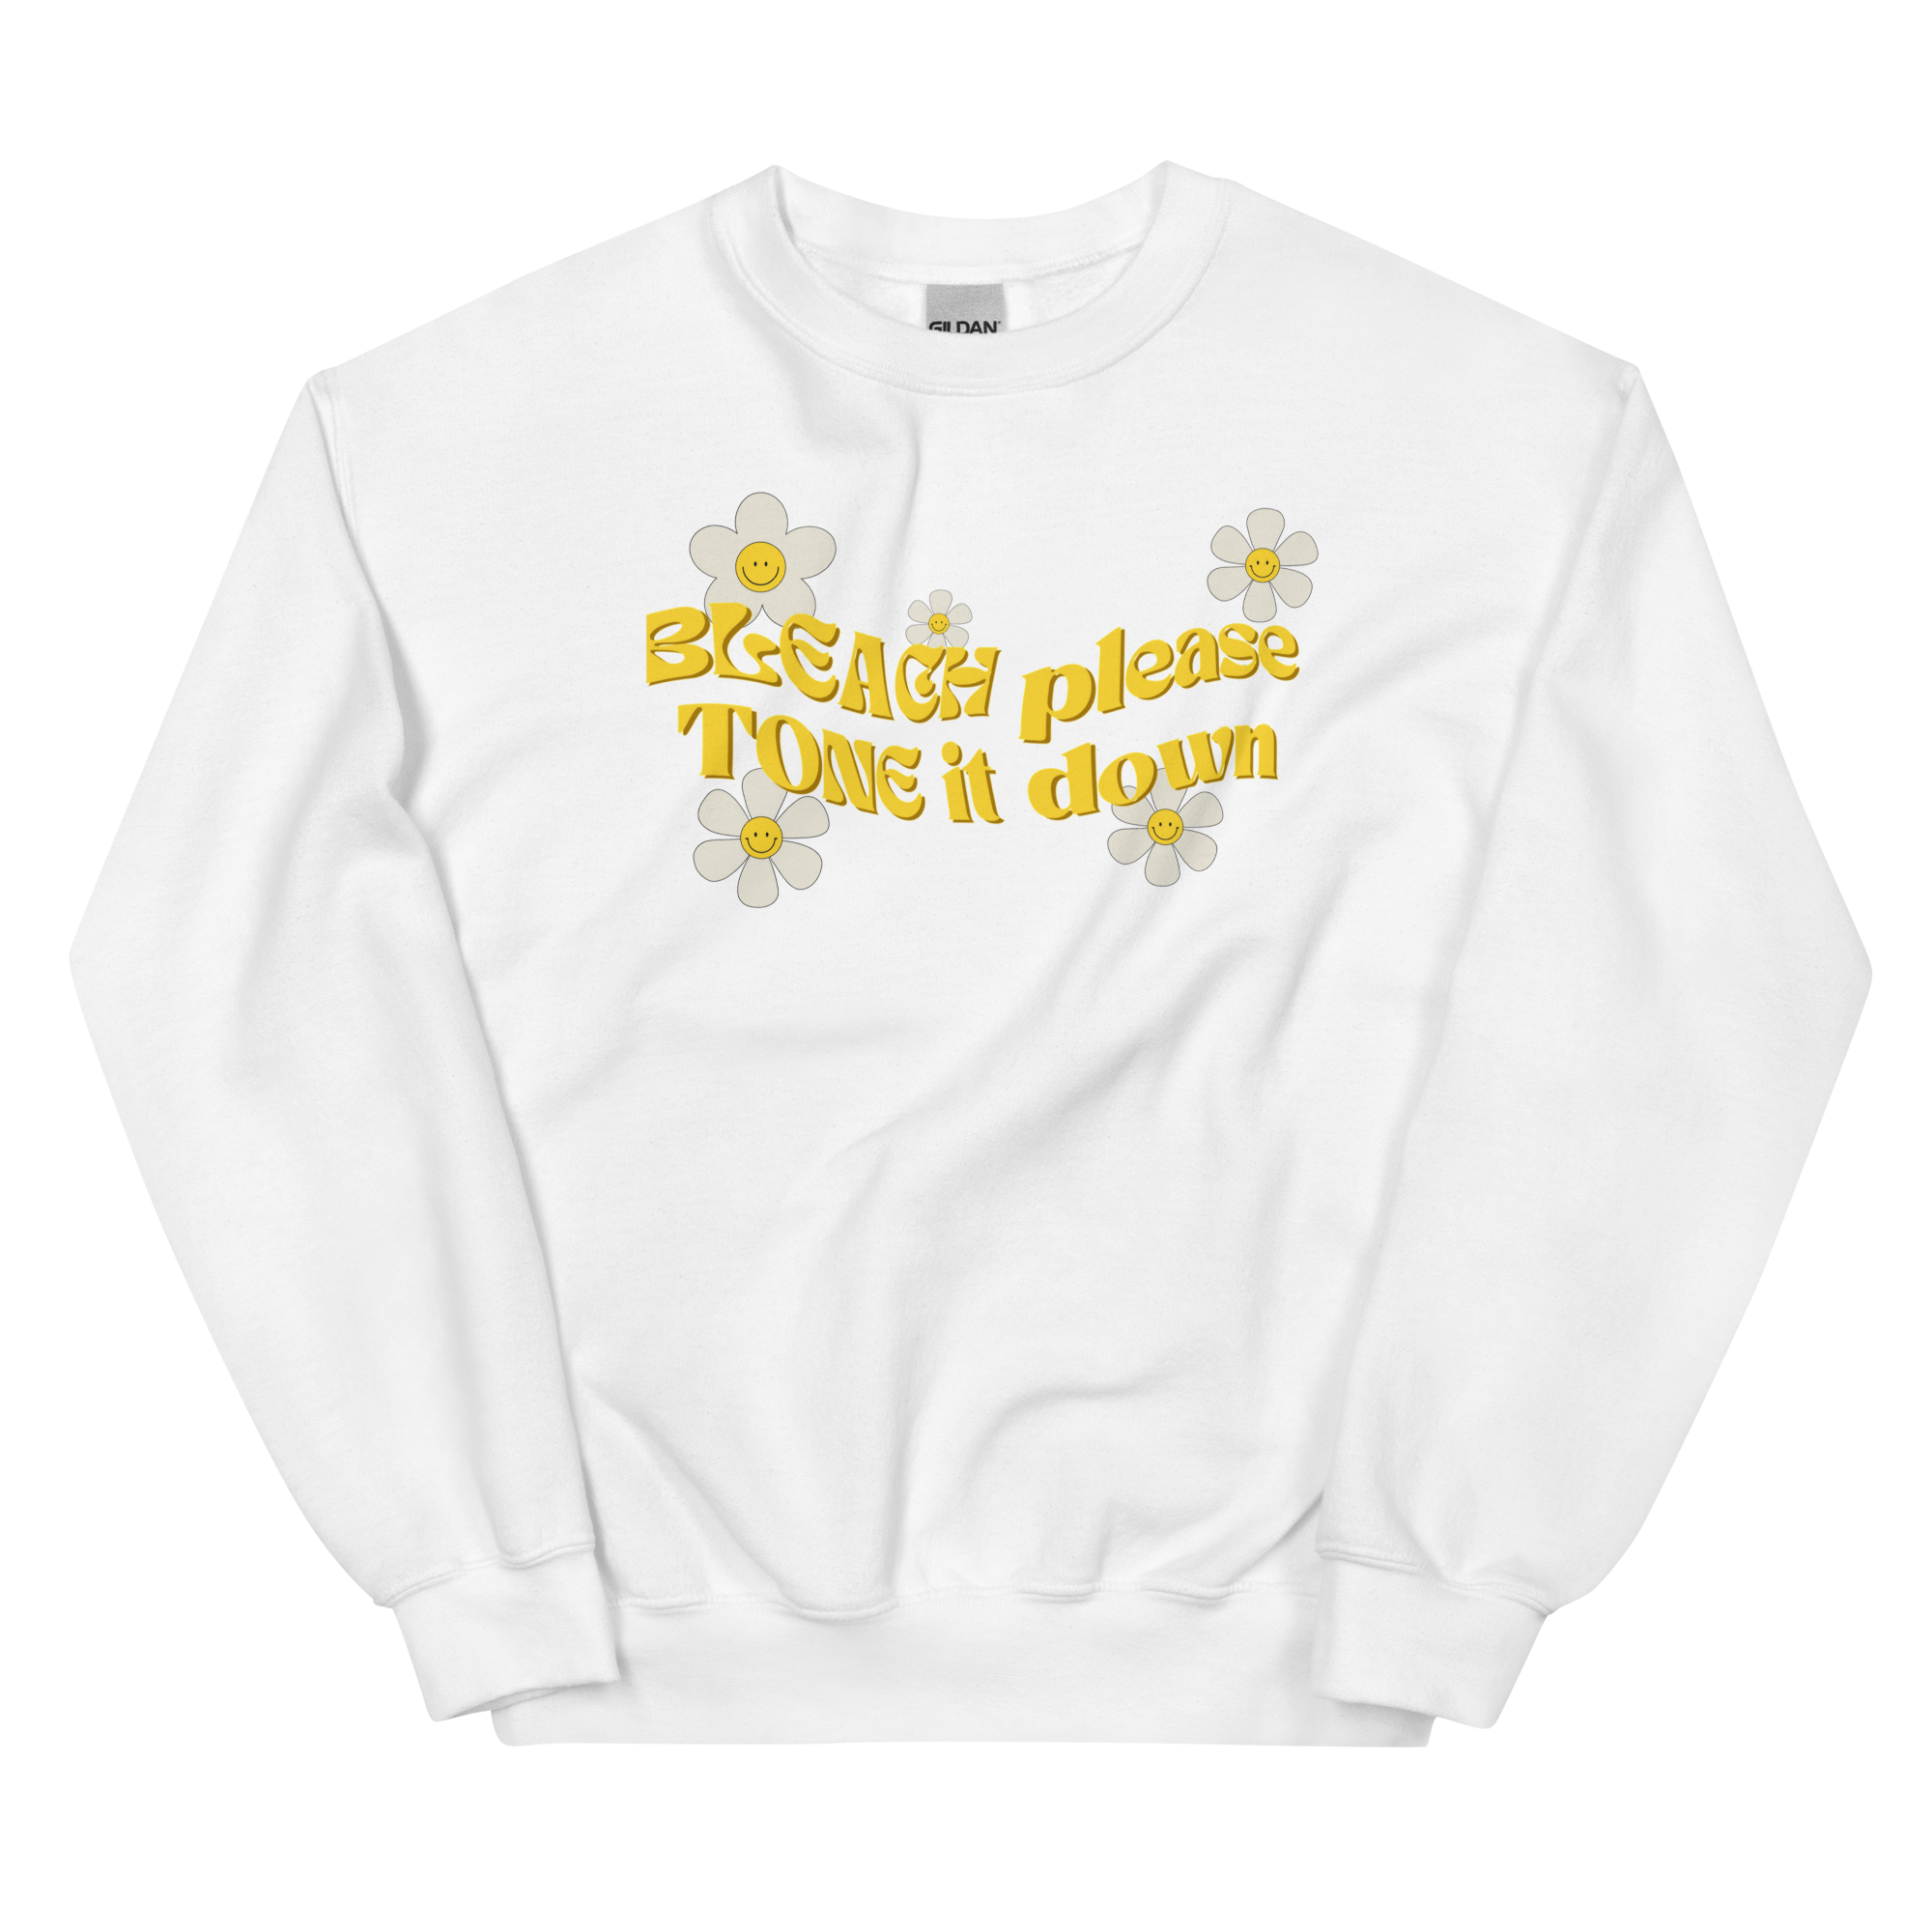 Bleach Please Tone It Down Crewneck Sweatshirt